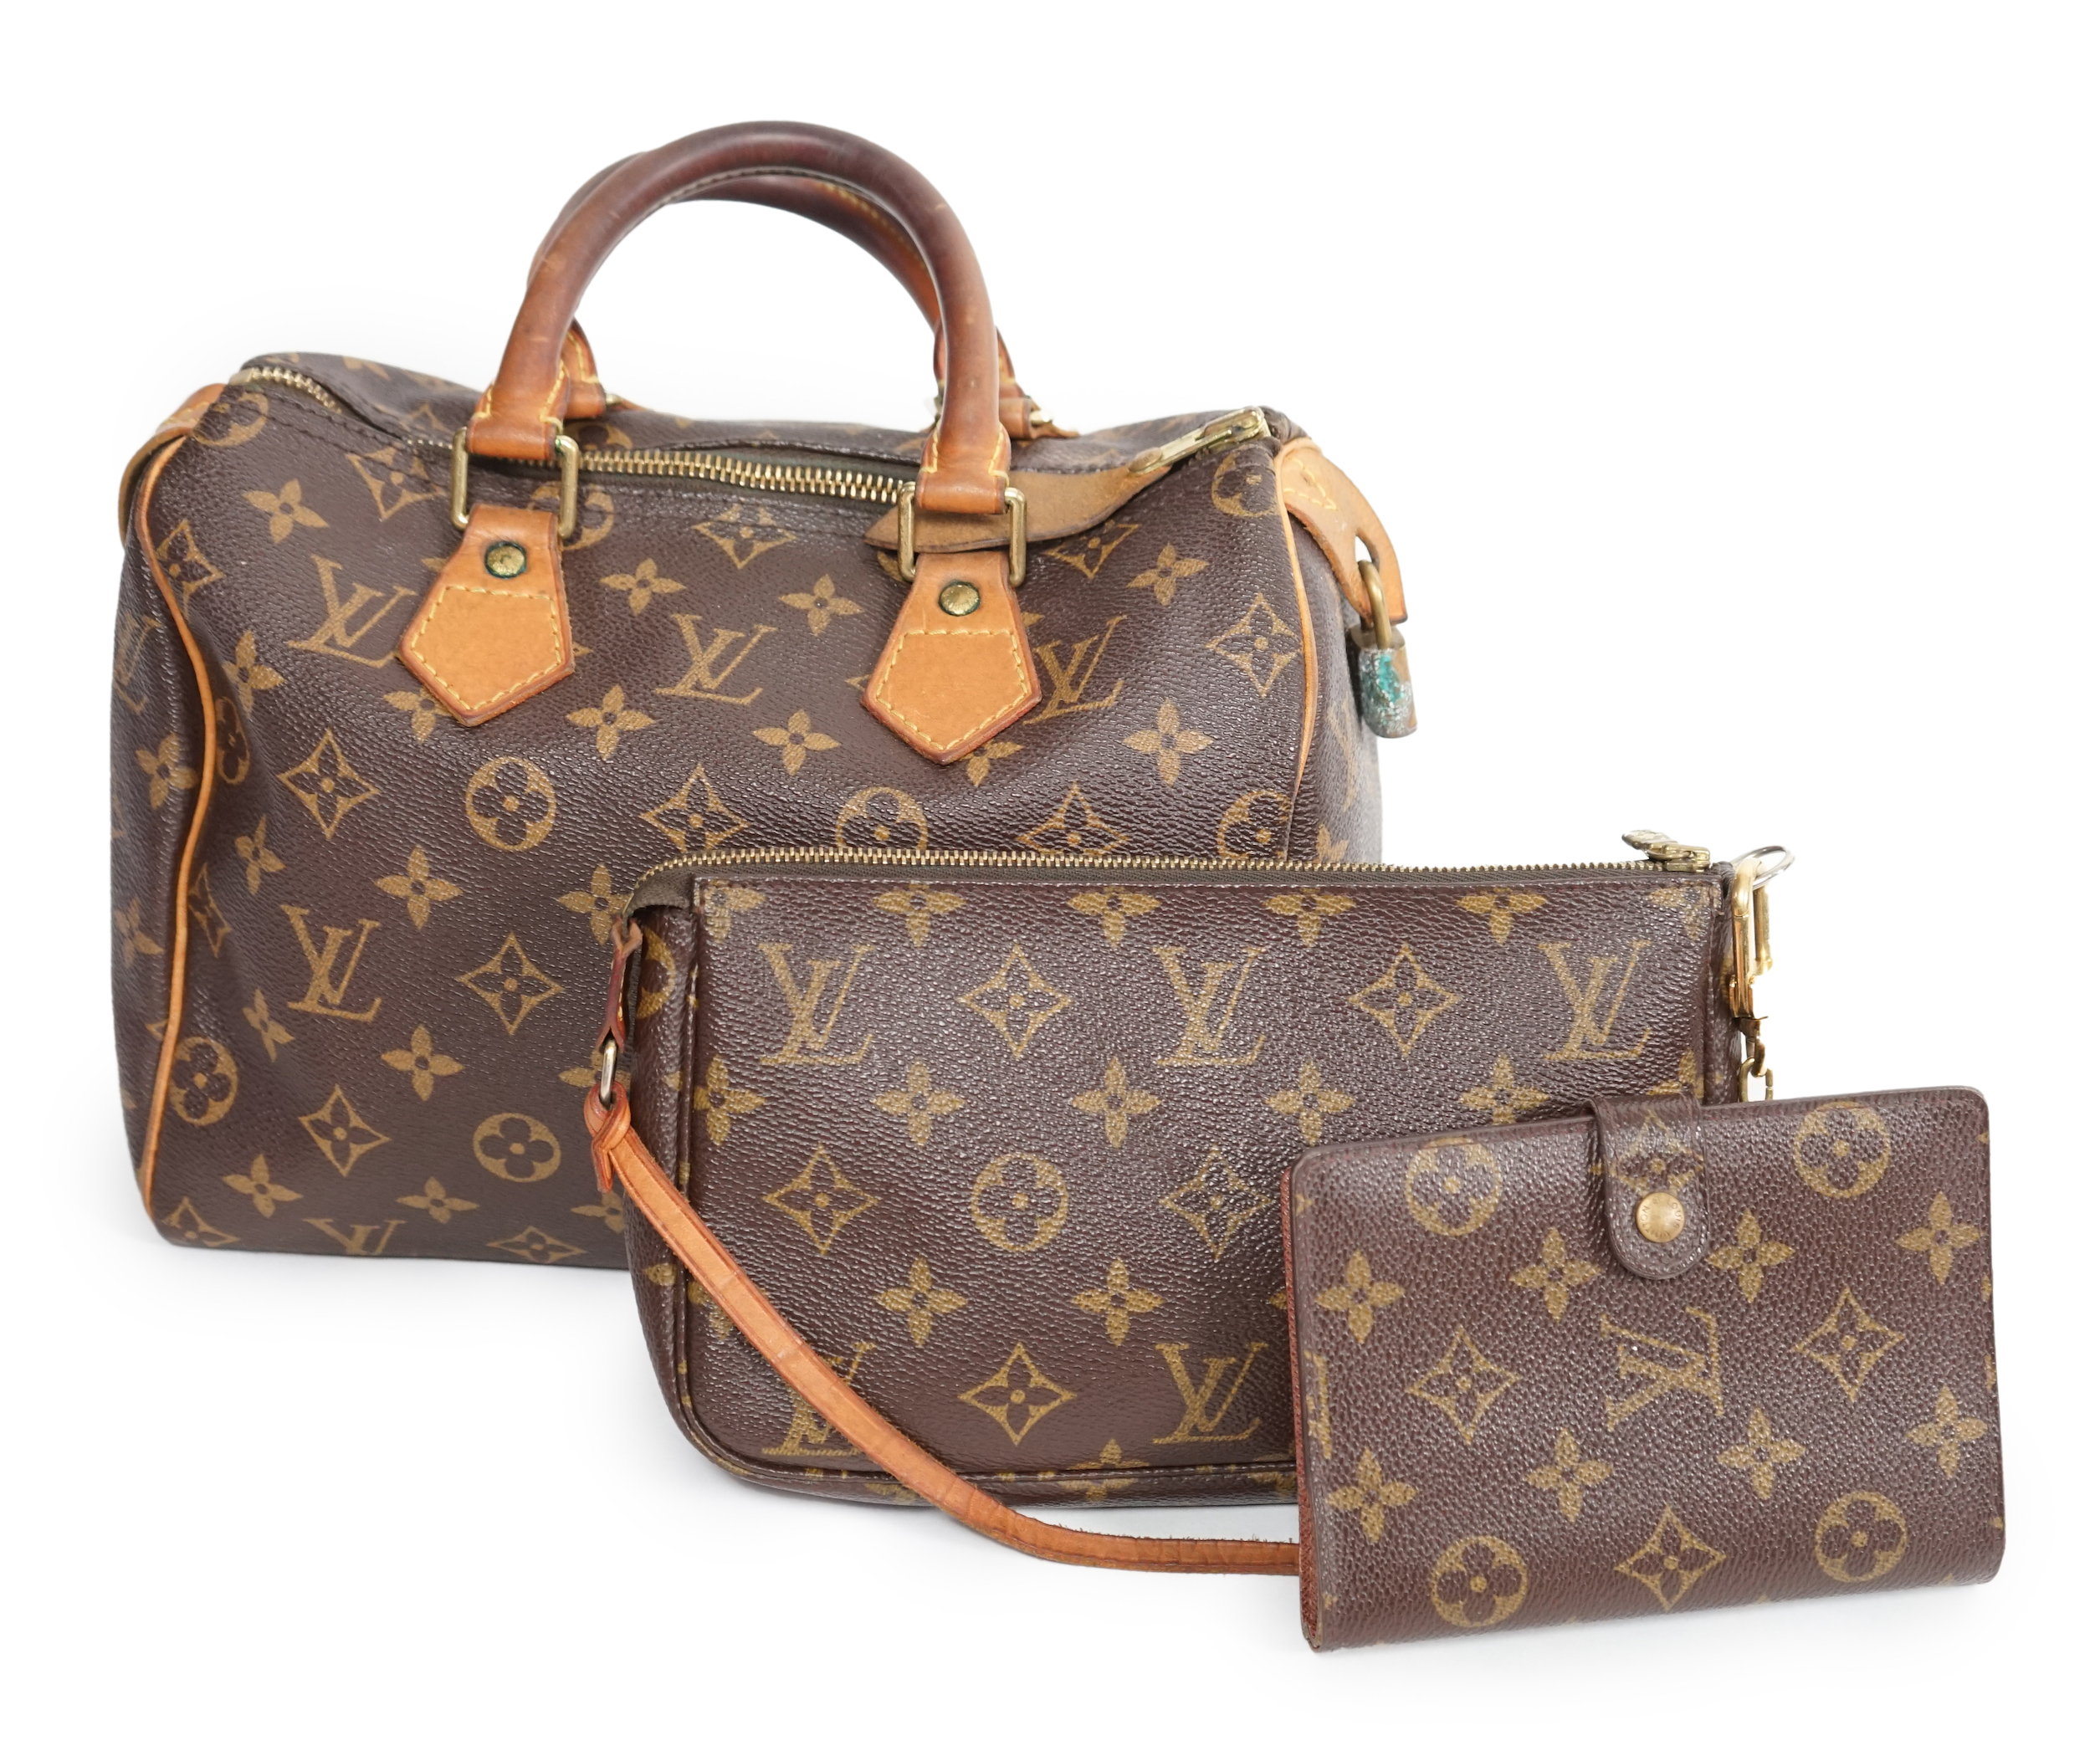 A vintage Louis Vuitton Monogram canvas Speedy 25 handbag, a Louis Vuitton Pochette Accessories Canvas bag and small Agenda PM Speedy bag: width 25cm, height overall 29cmm depth15cm, Pochette Bag: width 22cm, height 13cm